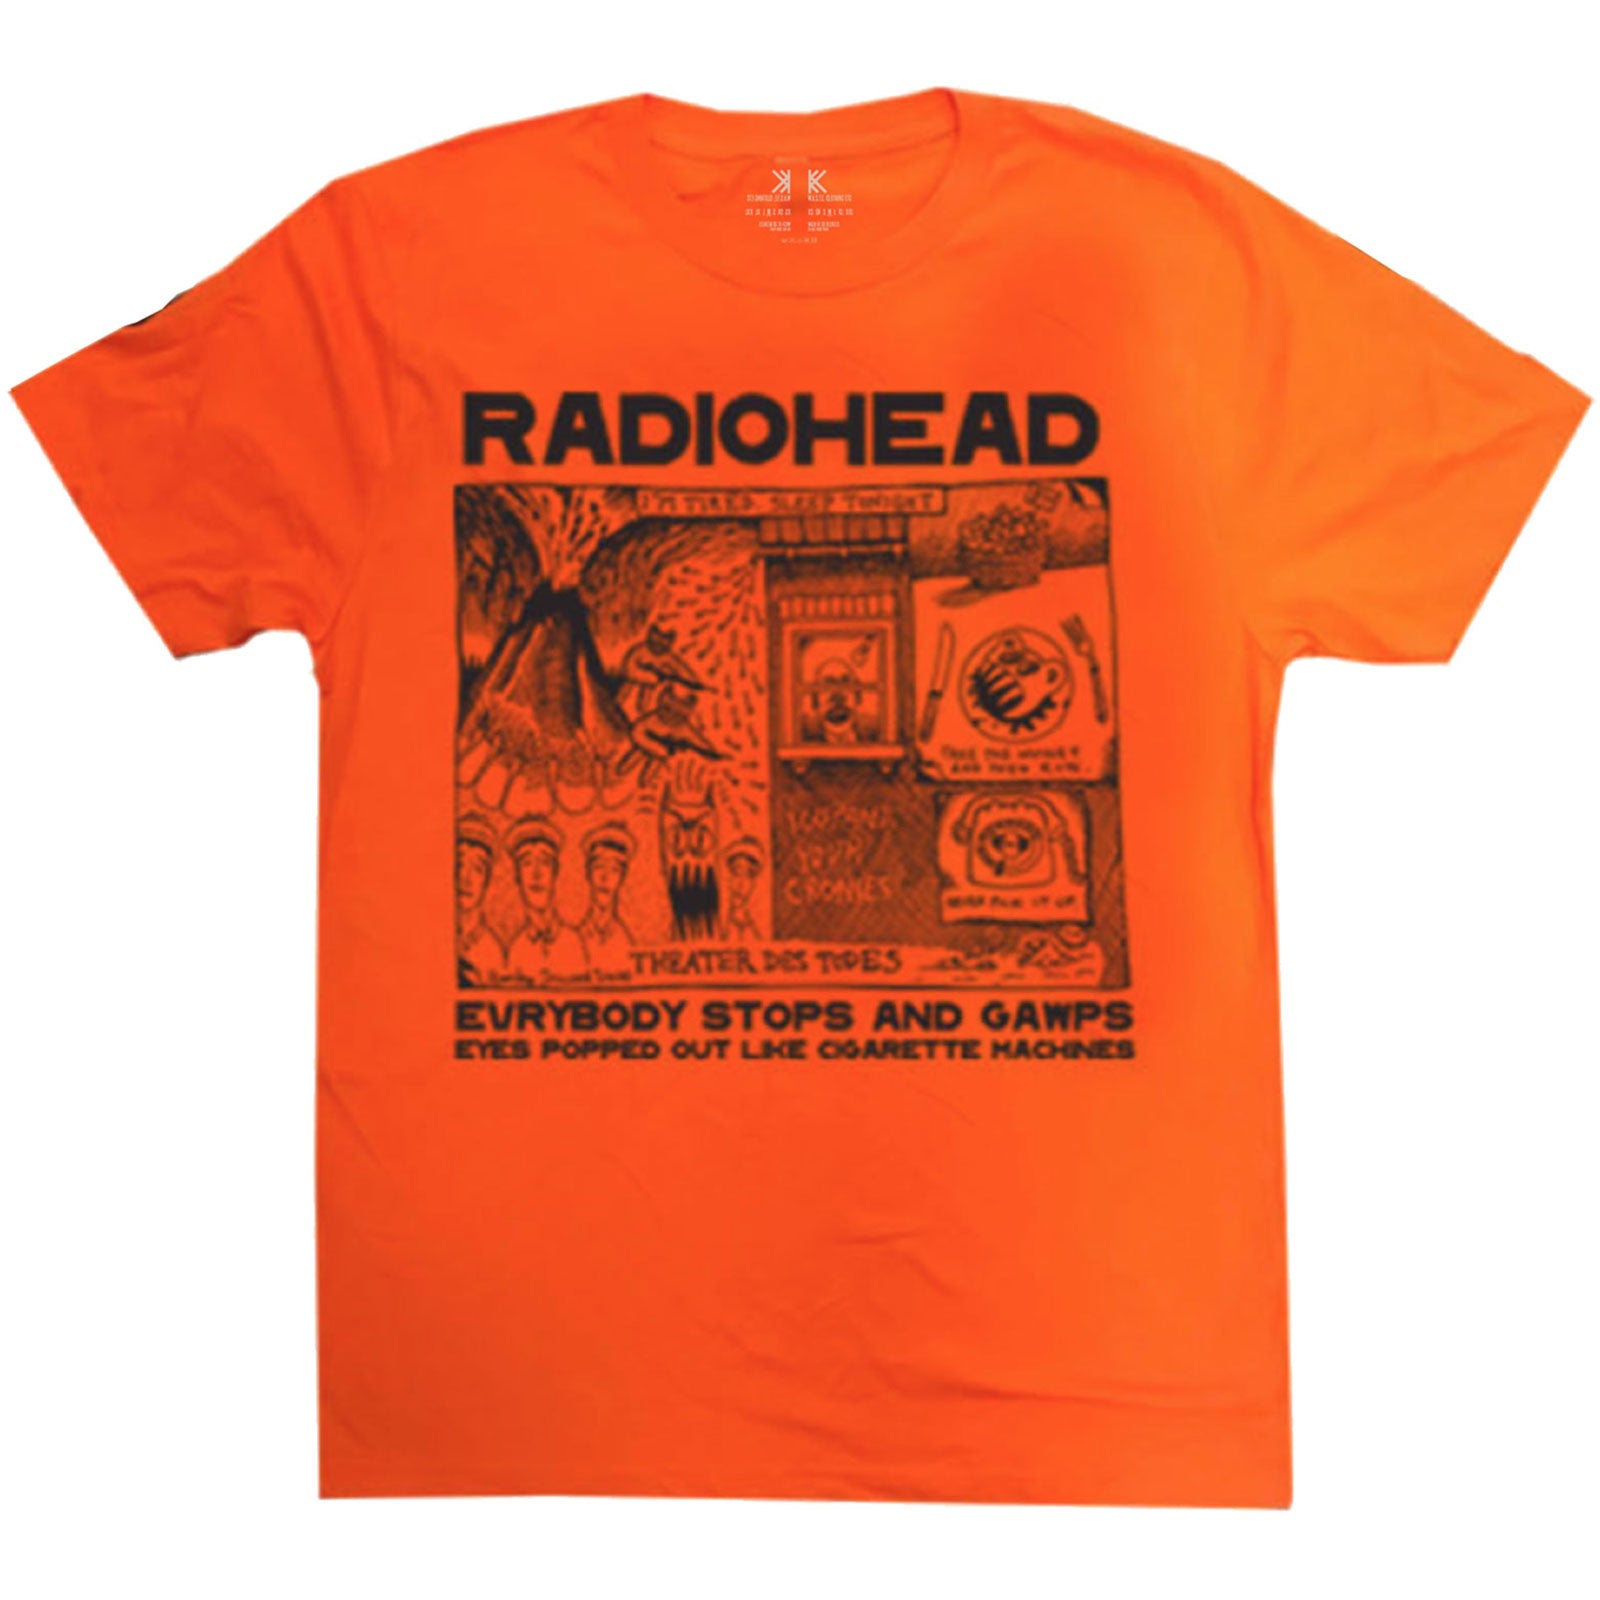 Radiohead "Gawps" Unisex Tee